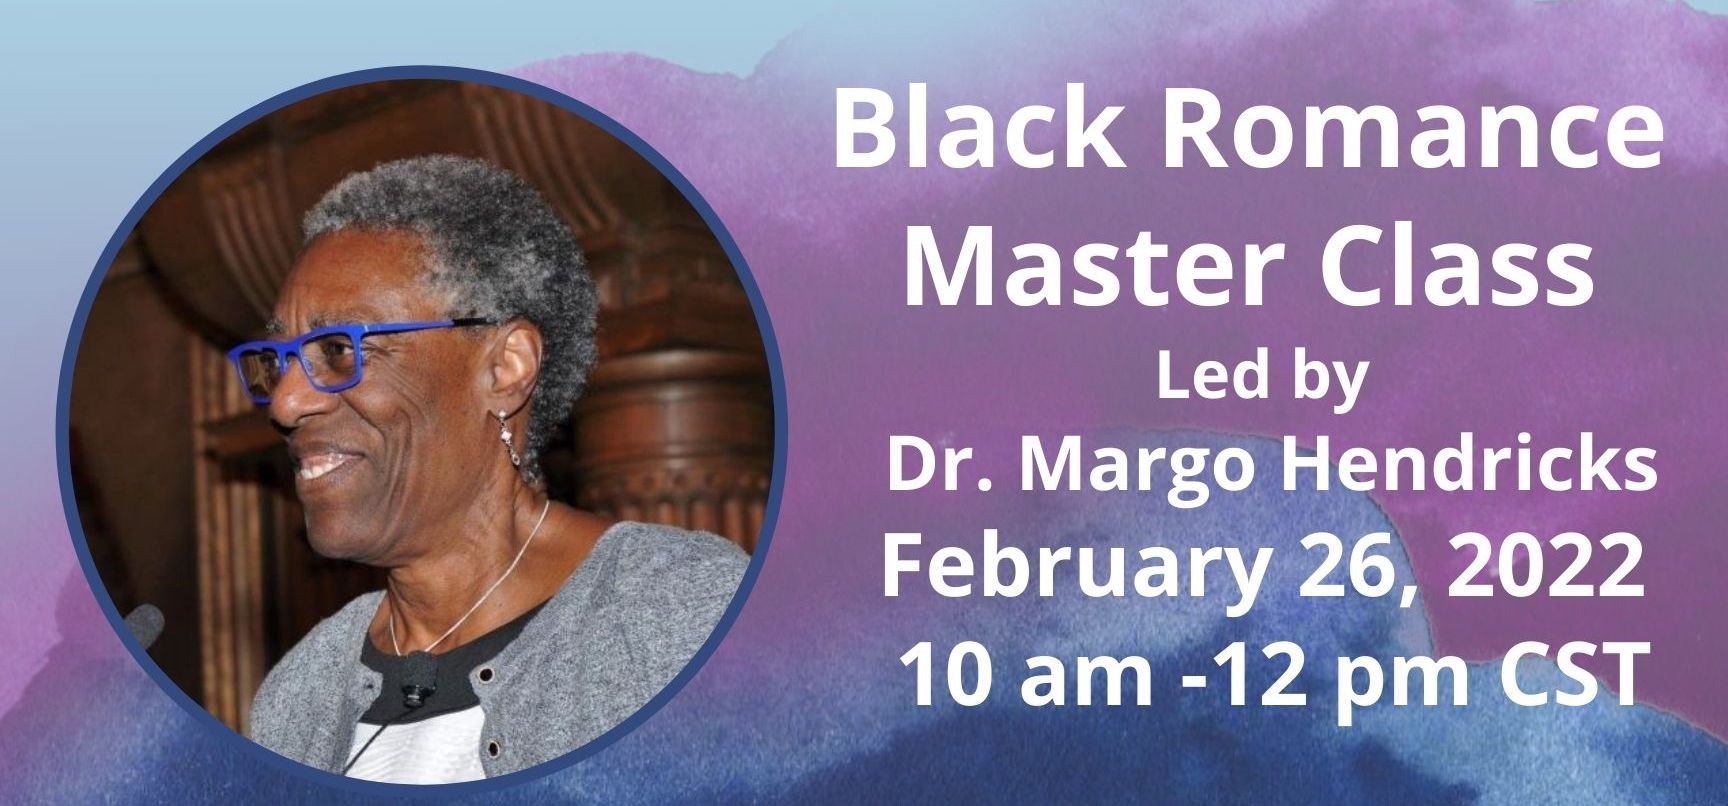 Black Romance Master Class Led by: Dr. Margot Hendricks, February 26, 2022, 10am - 12pm CST.